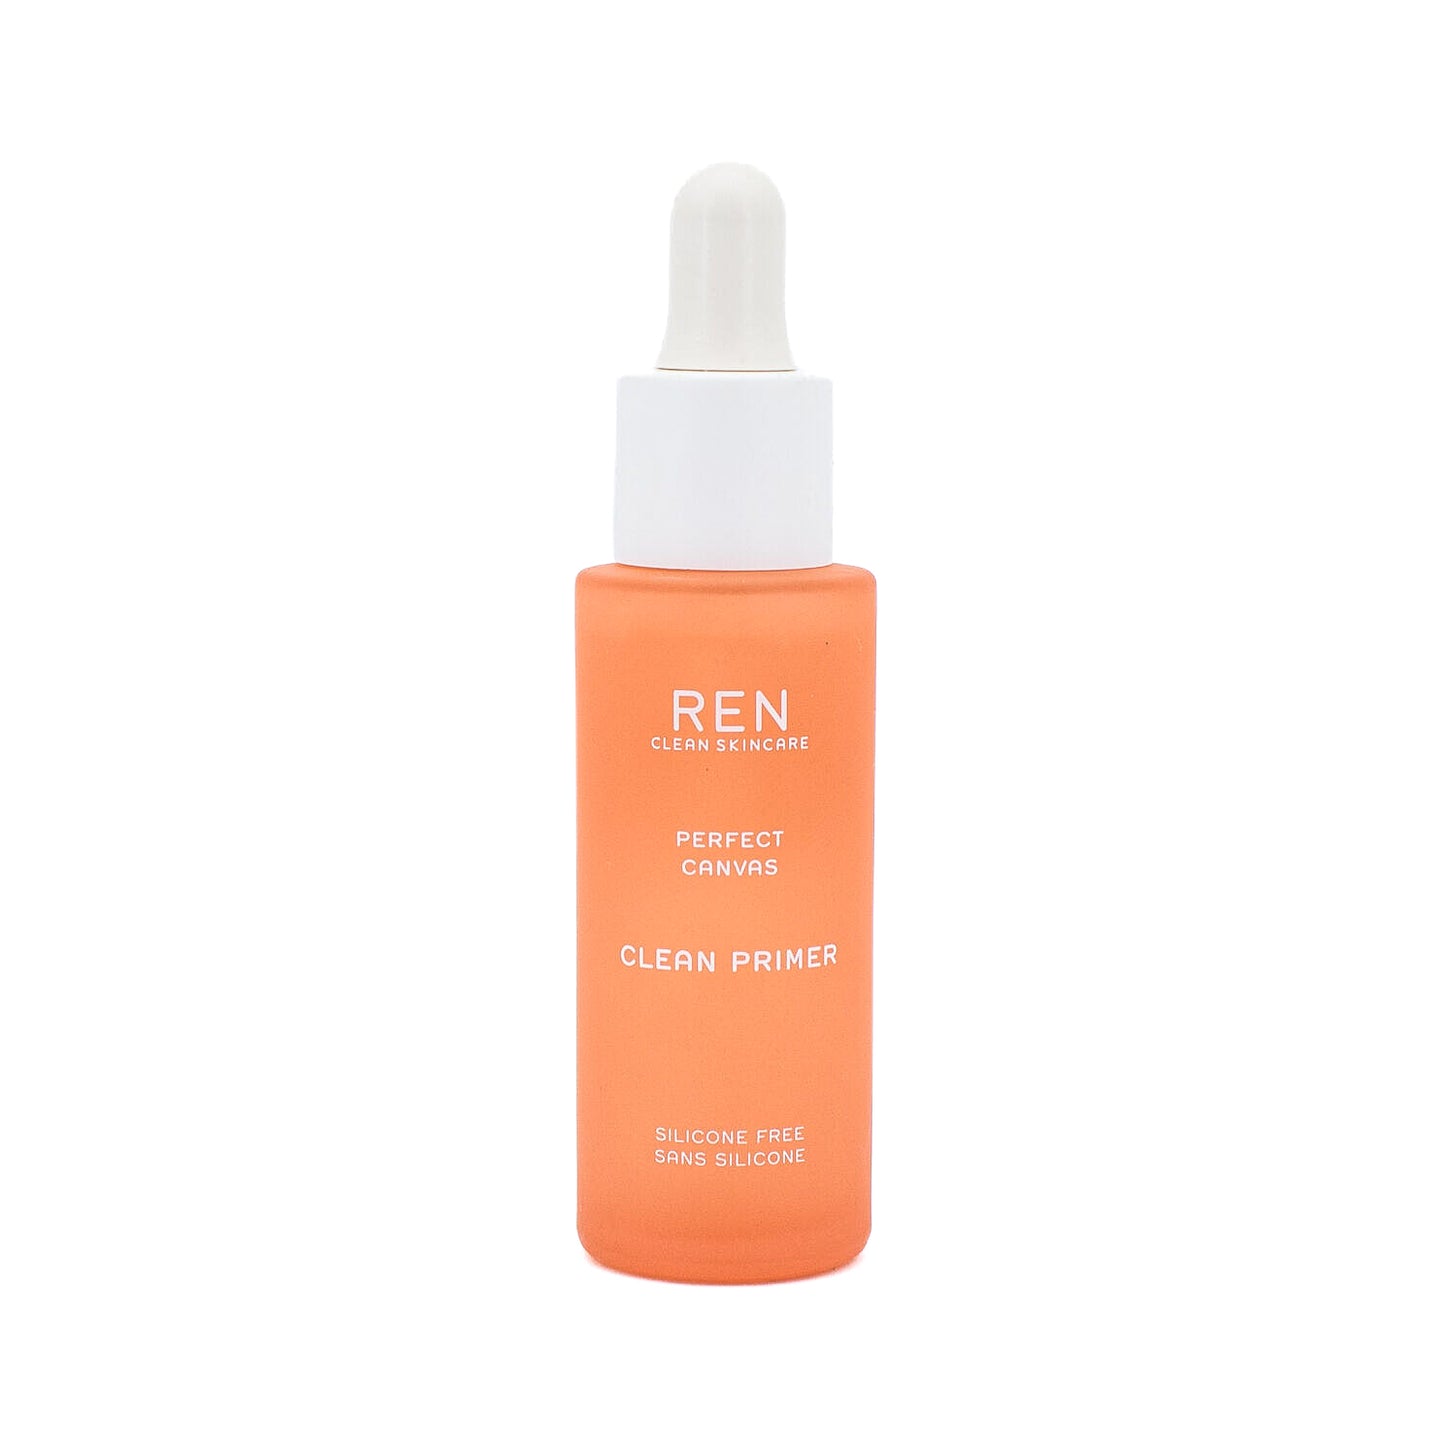 REN Clean Skincare Perfect Canvas Clean Primer 1.02oz - Missing Box